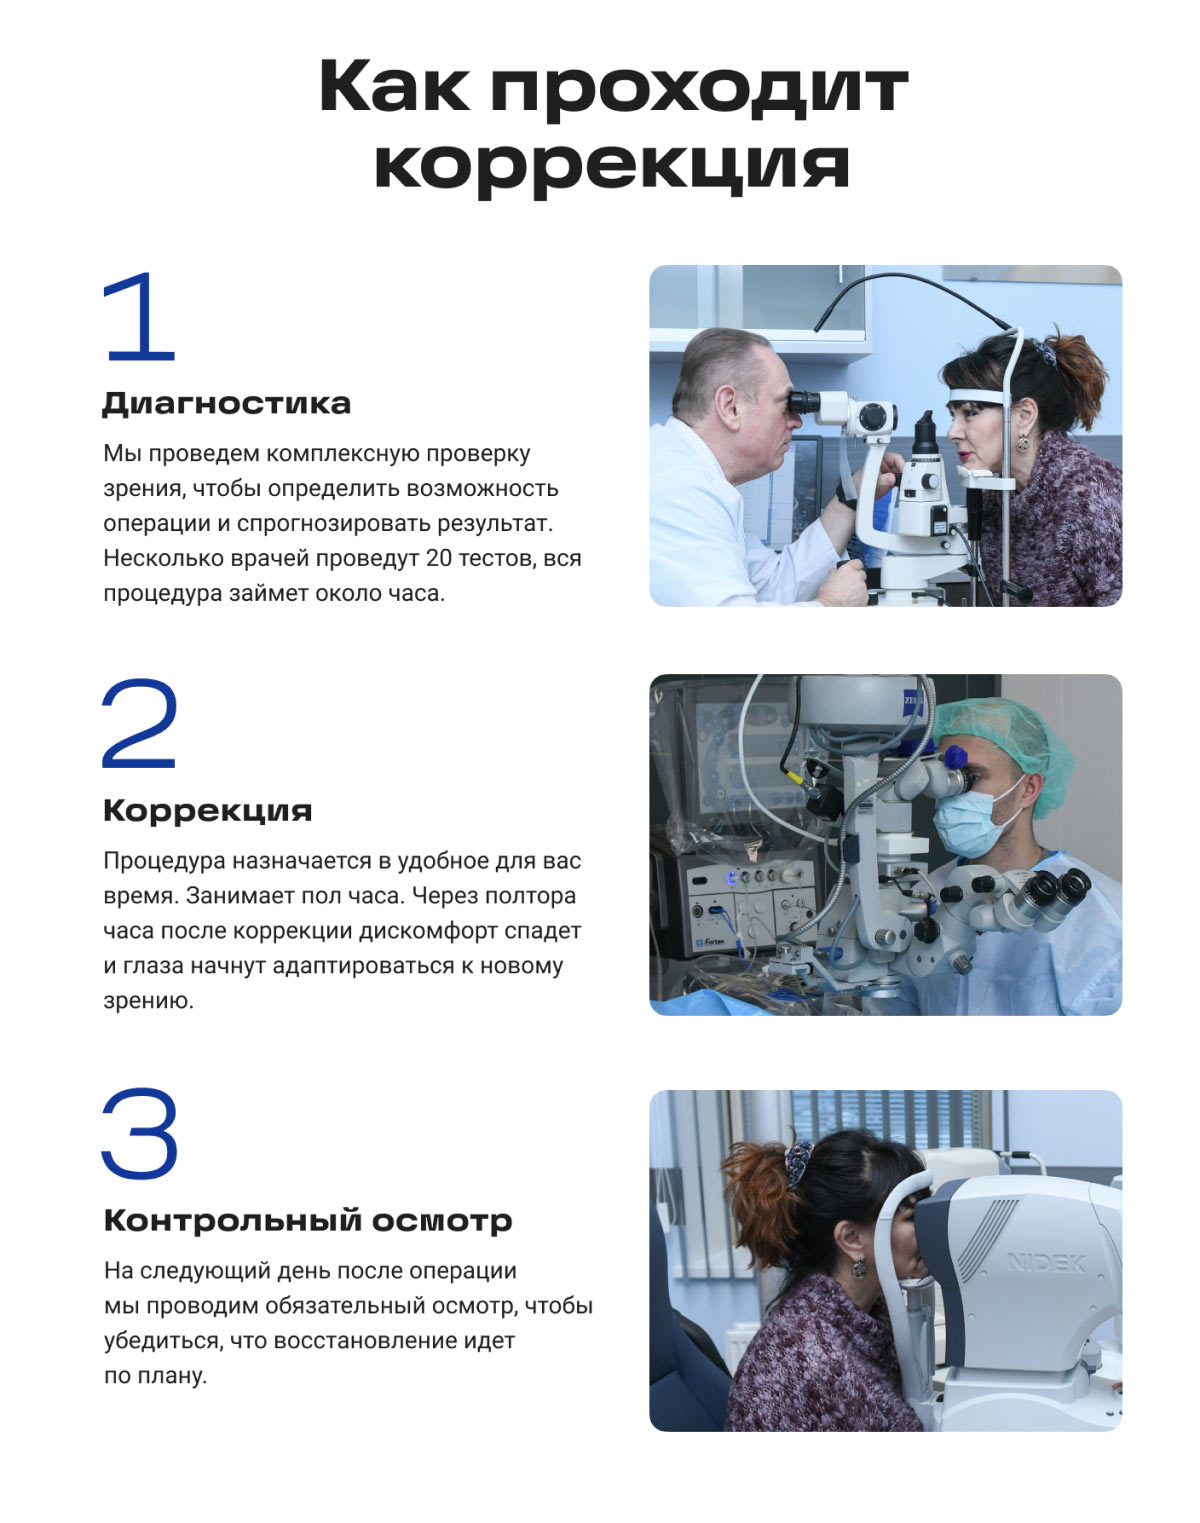 gazprom eye clinic process 17